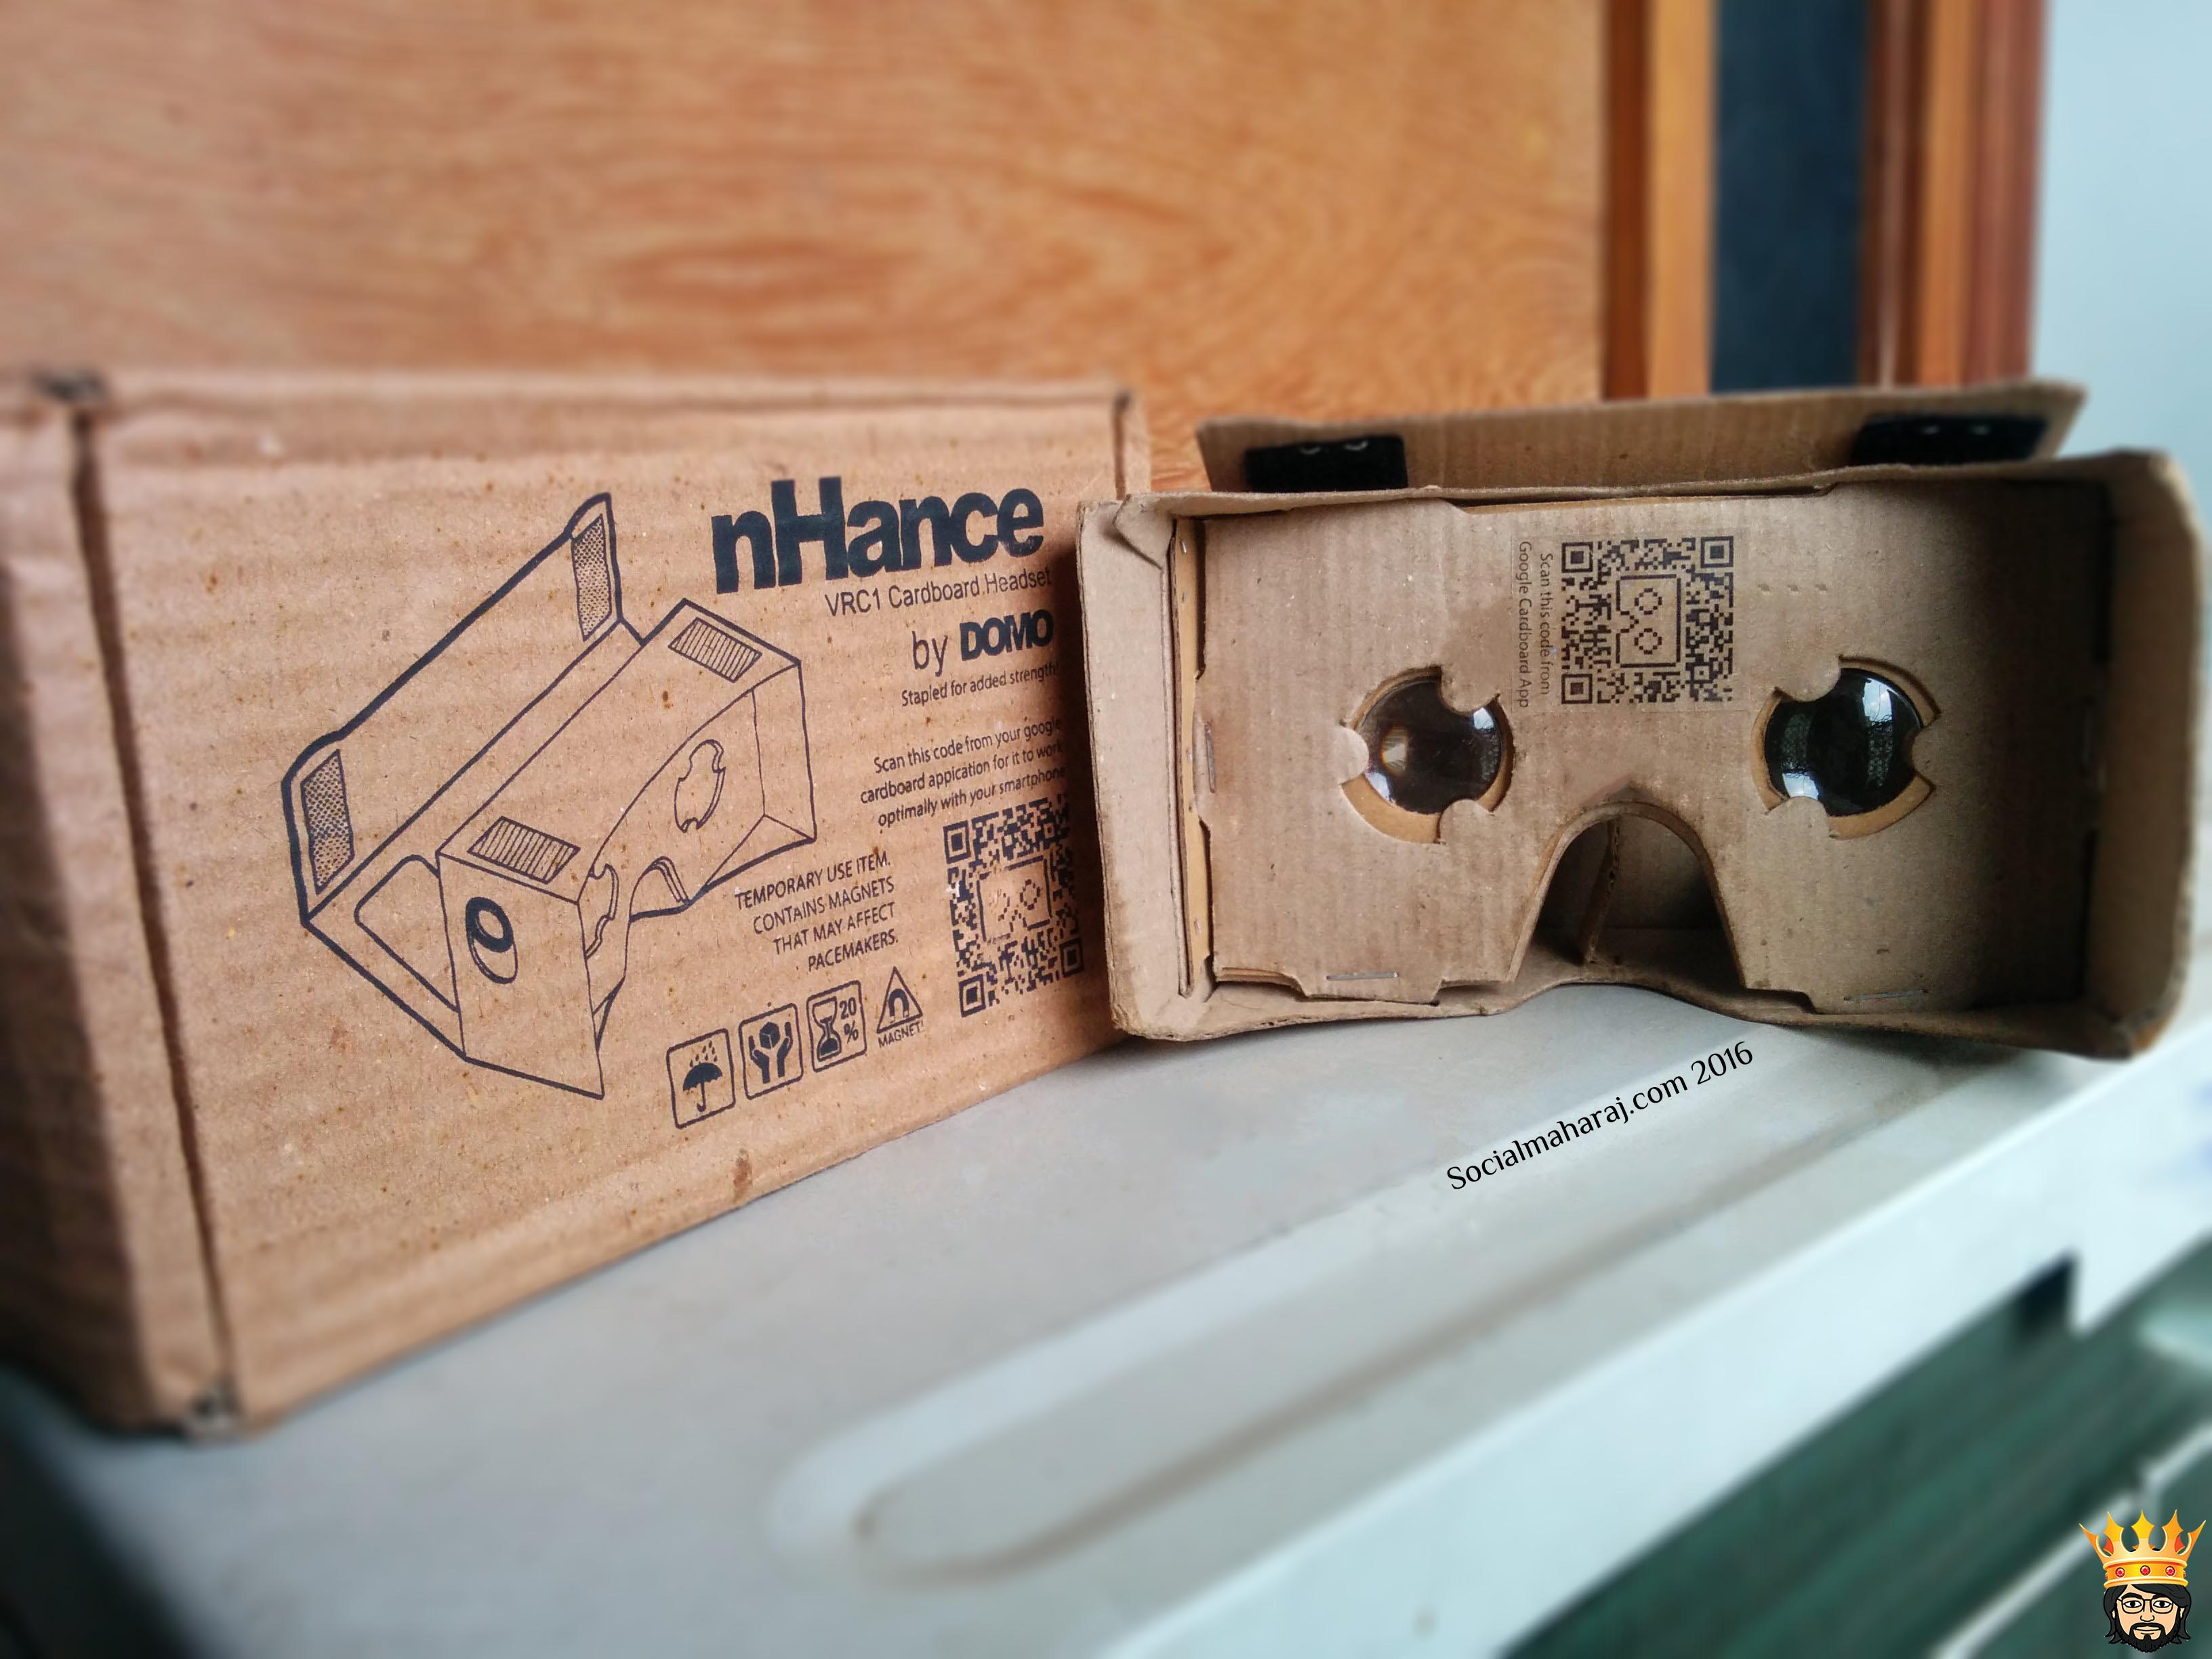 Domo nHance VRC1 - Google Cardboard VR Headset Review - SocialMaharaj